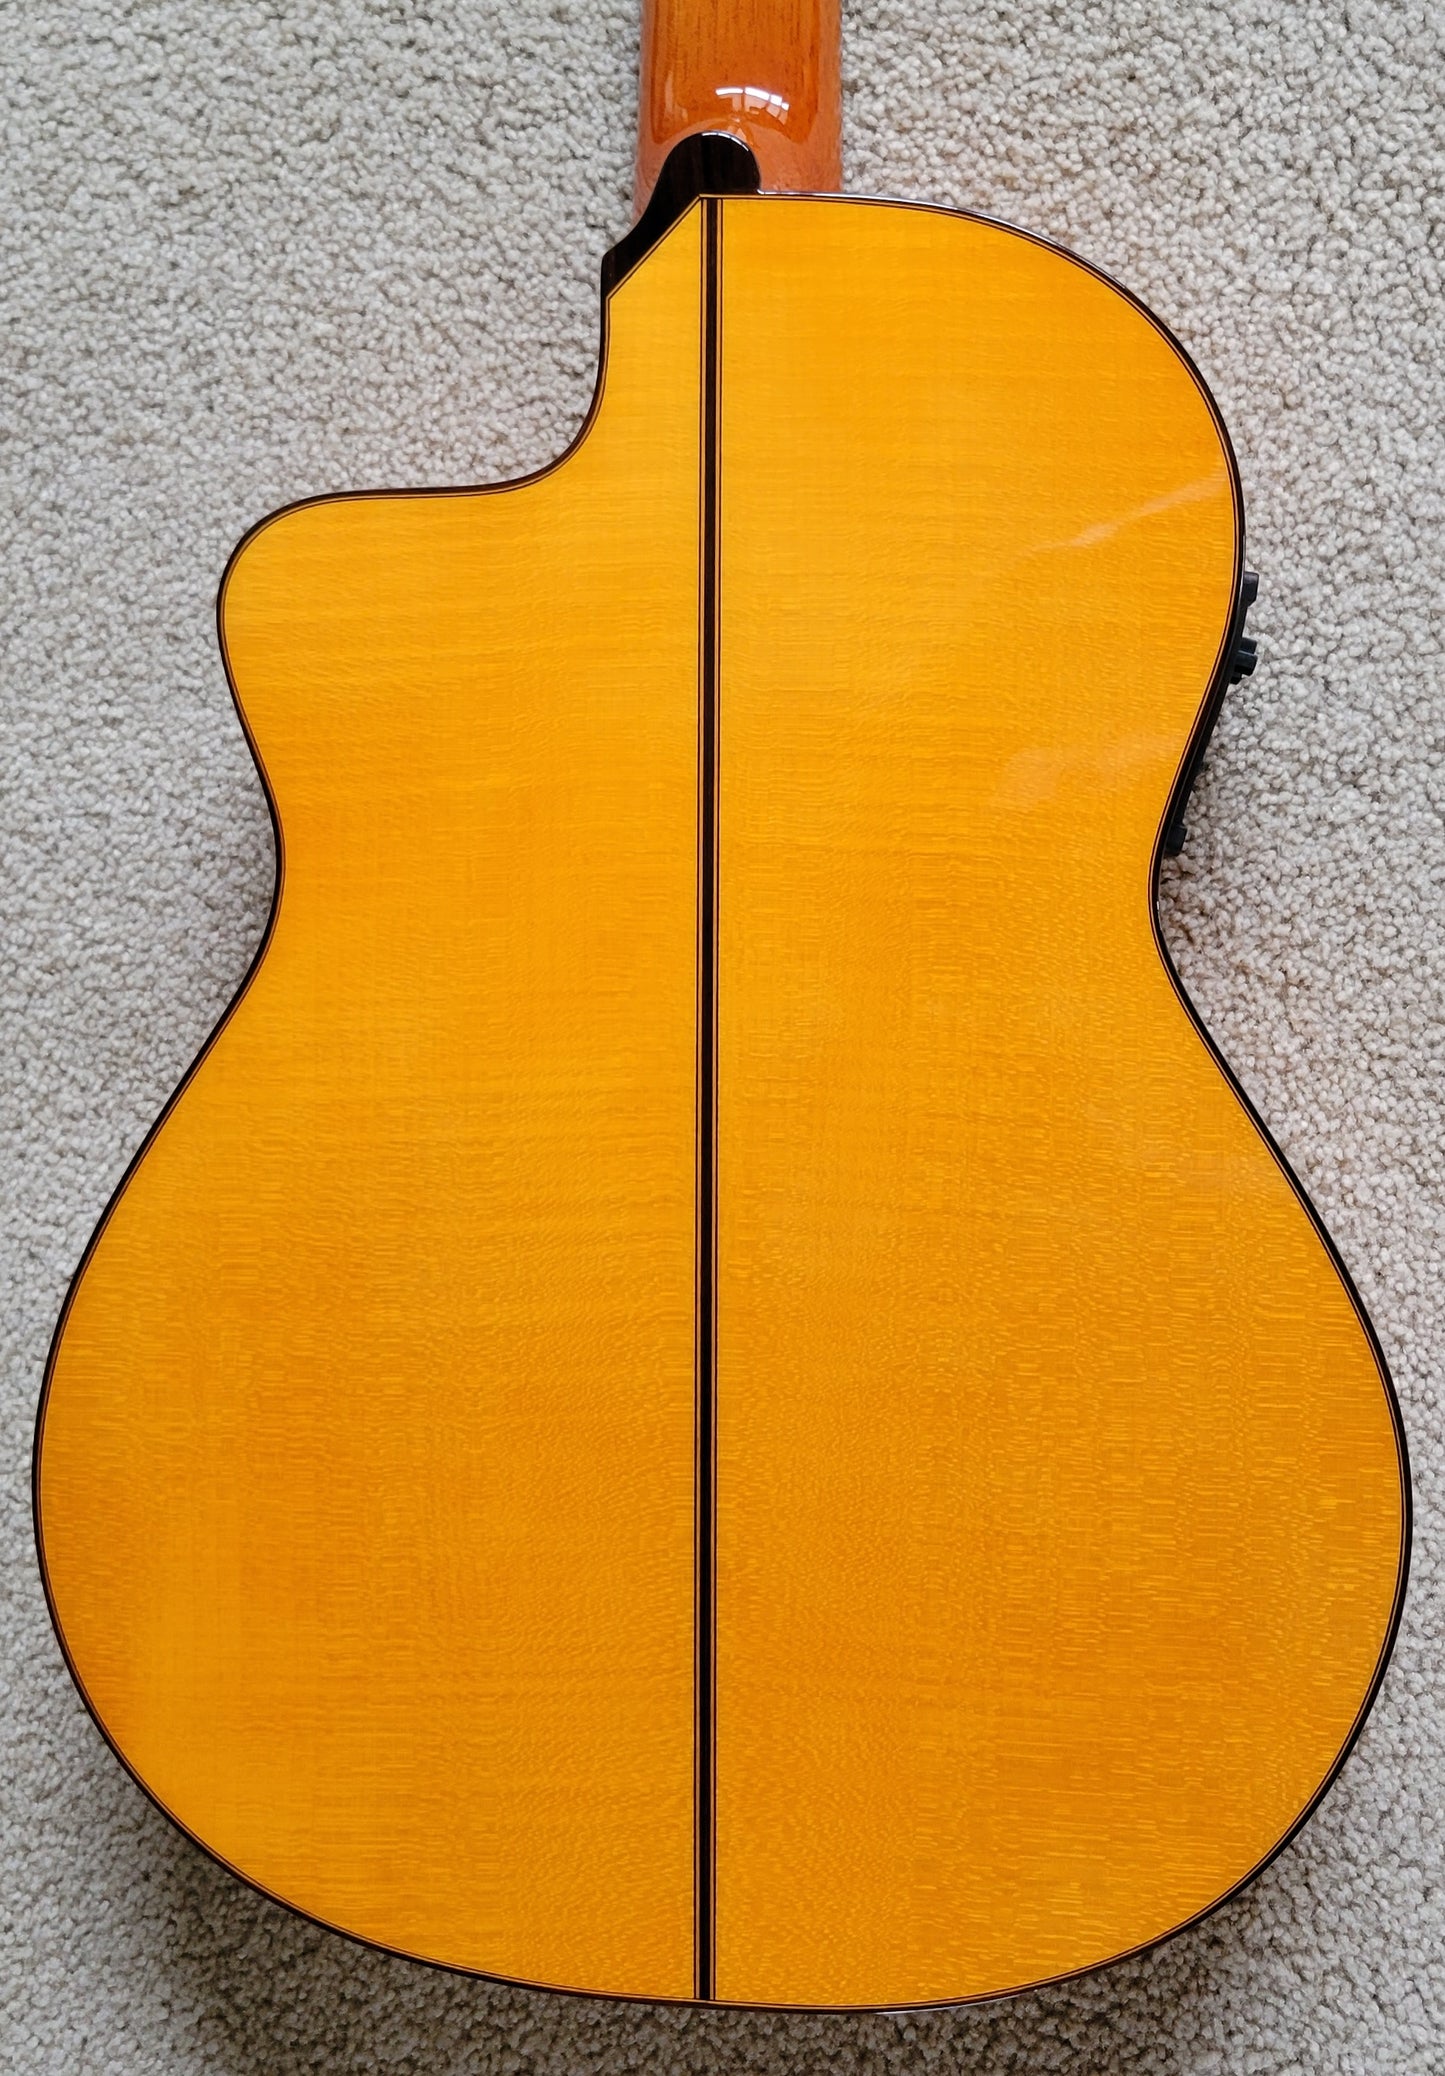 Cordoba 55FCE Thinbody Classical Acoustic Electric Guitar, Honey Amber, New Hard Shell Case